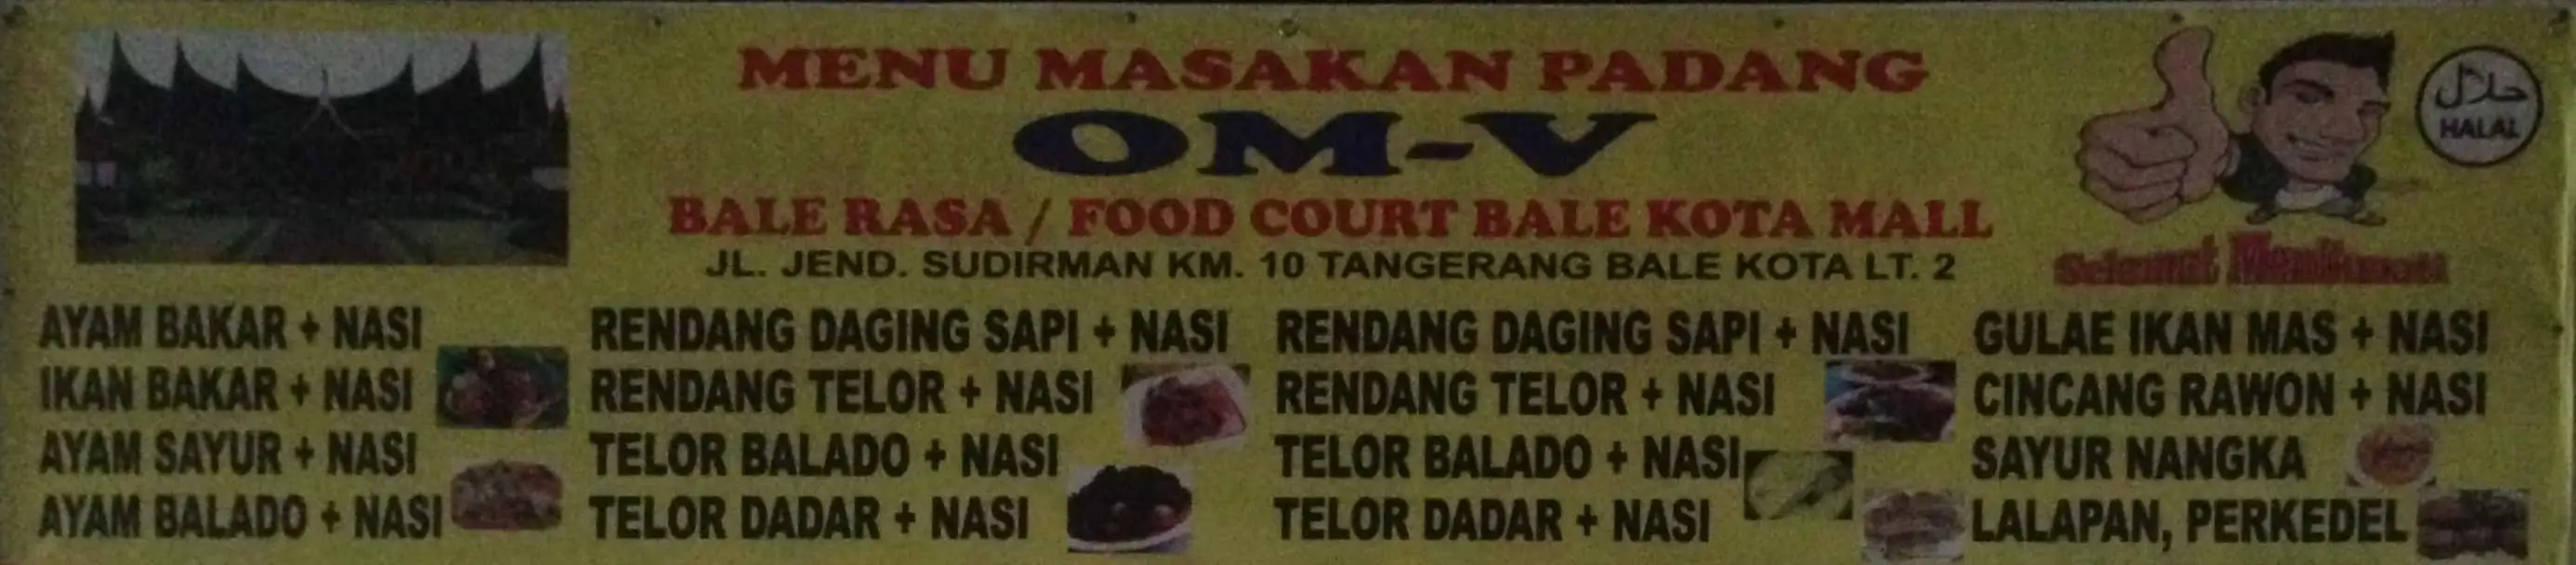 Om - V Nasi Padang